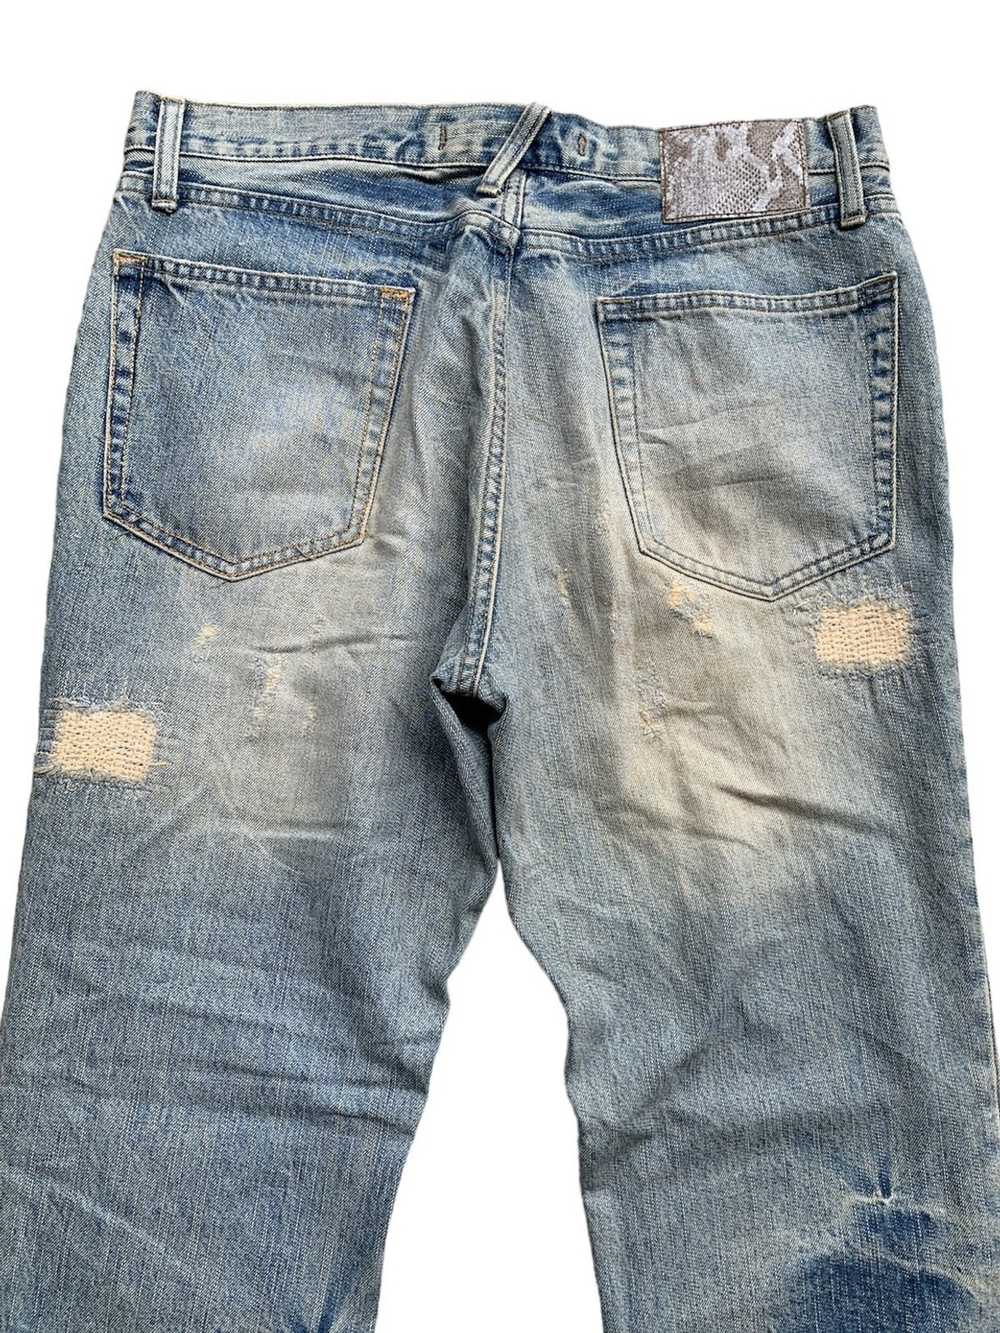 PPFM PPFM Distressed Denim Jeans - image 4